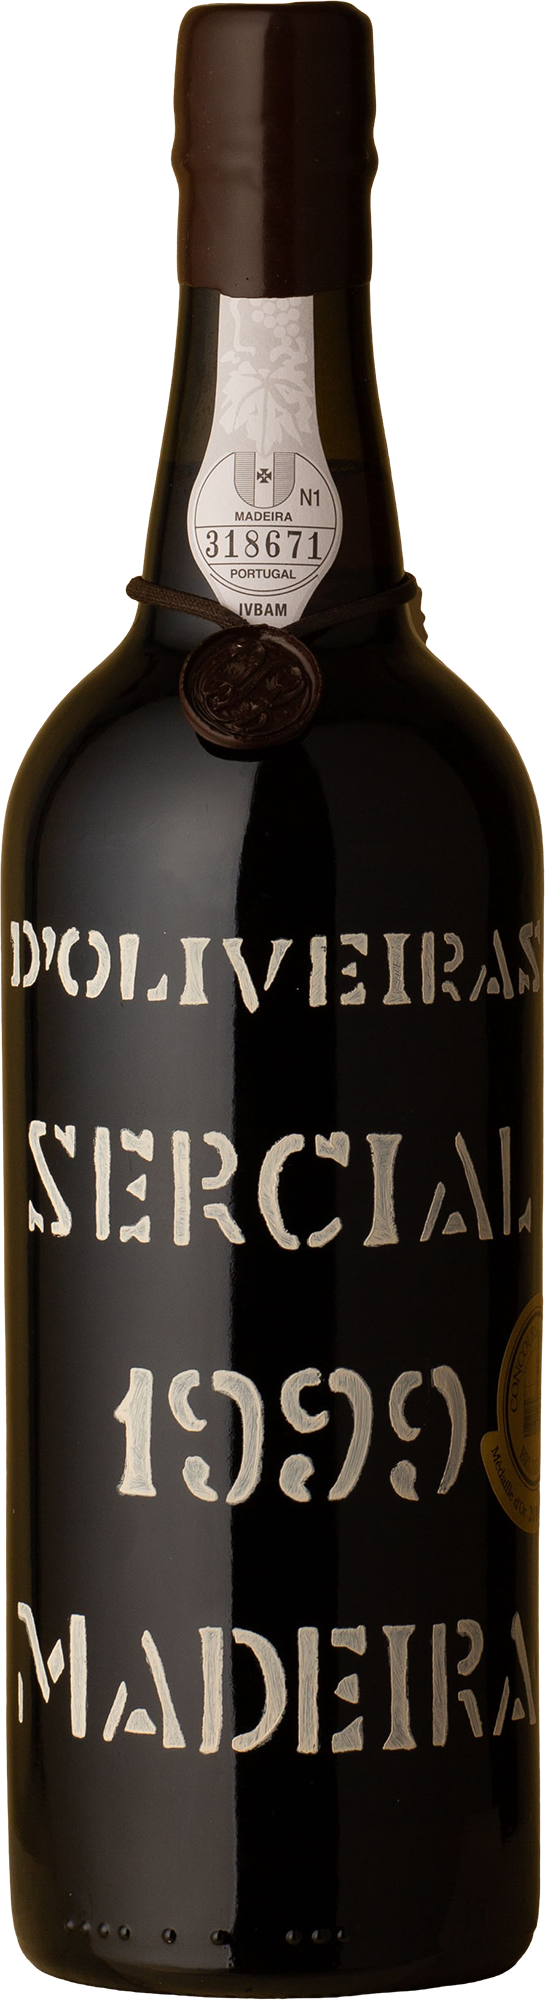 Pereira D’Oliveiras - Madeira Dry Colheita (Bottled 2013, 14yo) Sercial 1999 Not Wine